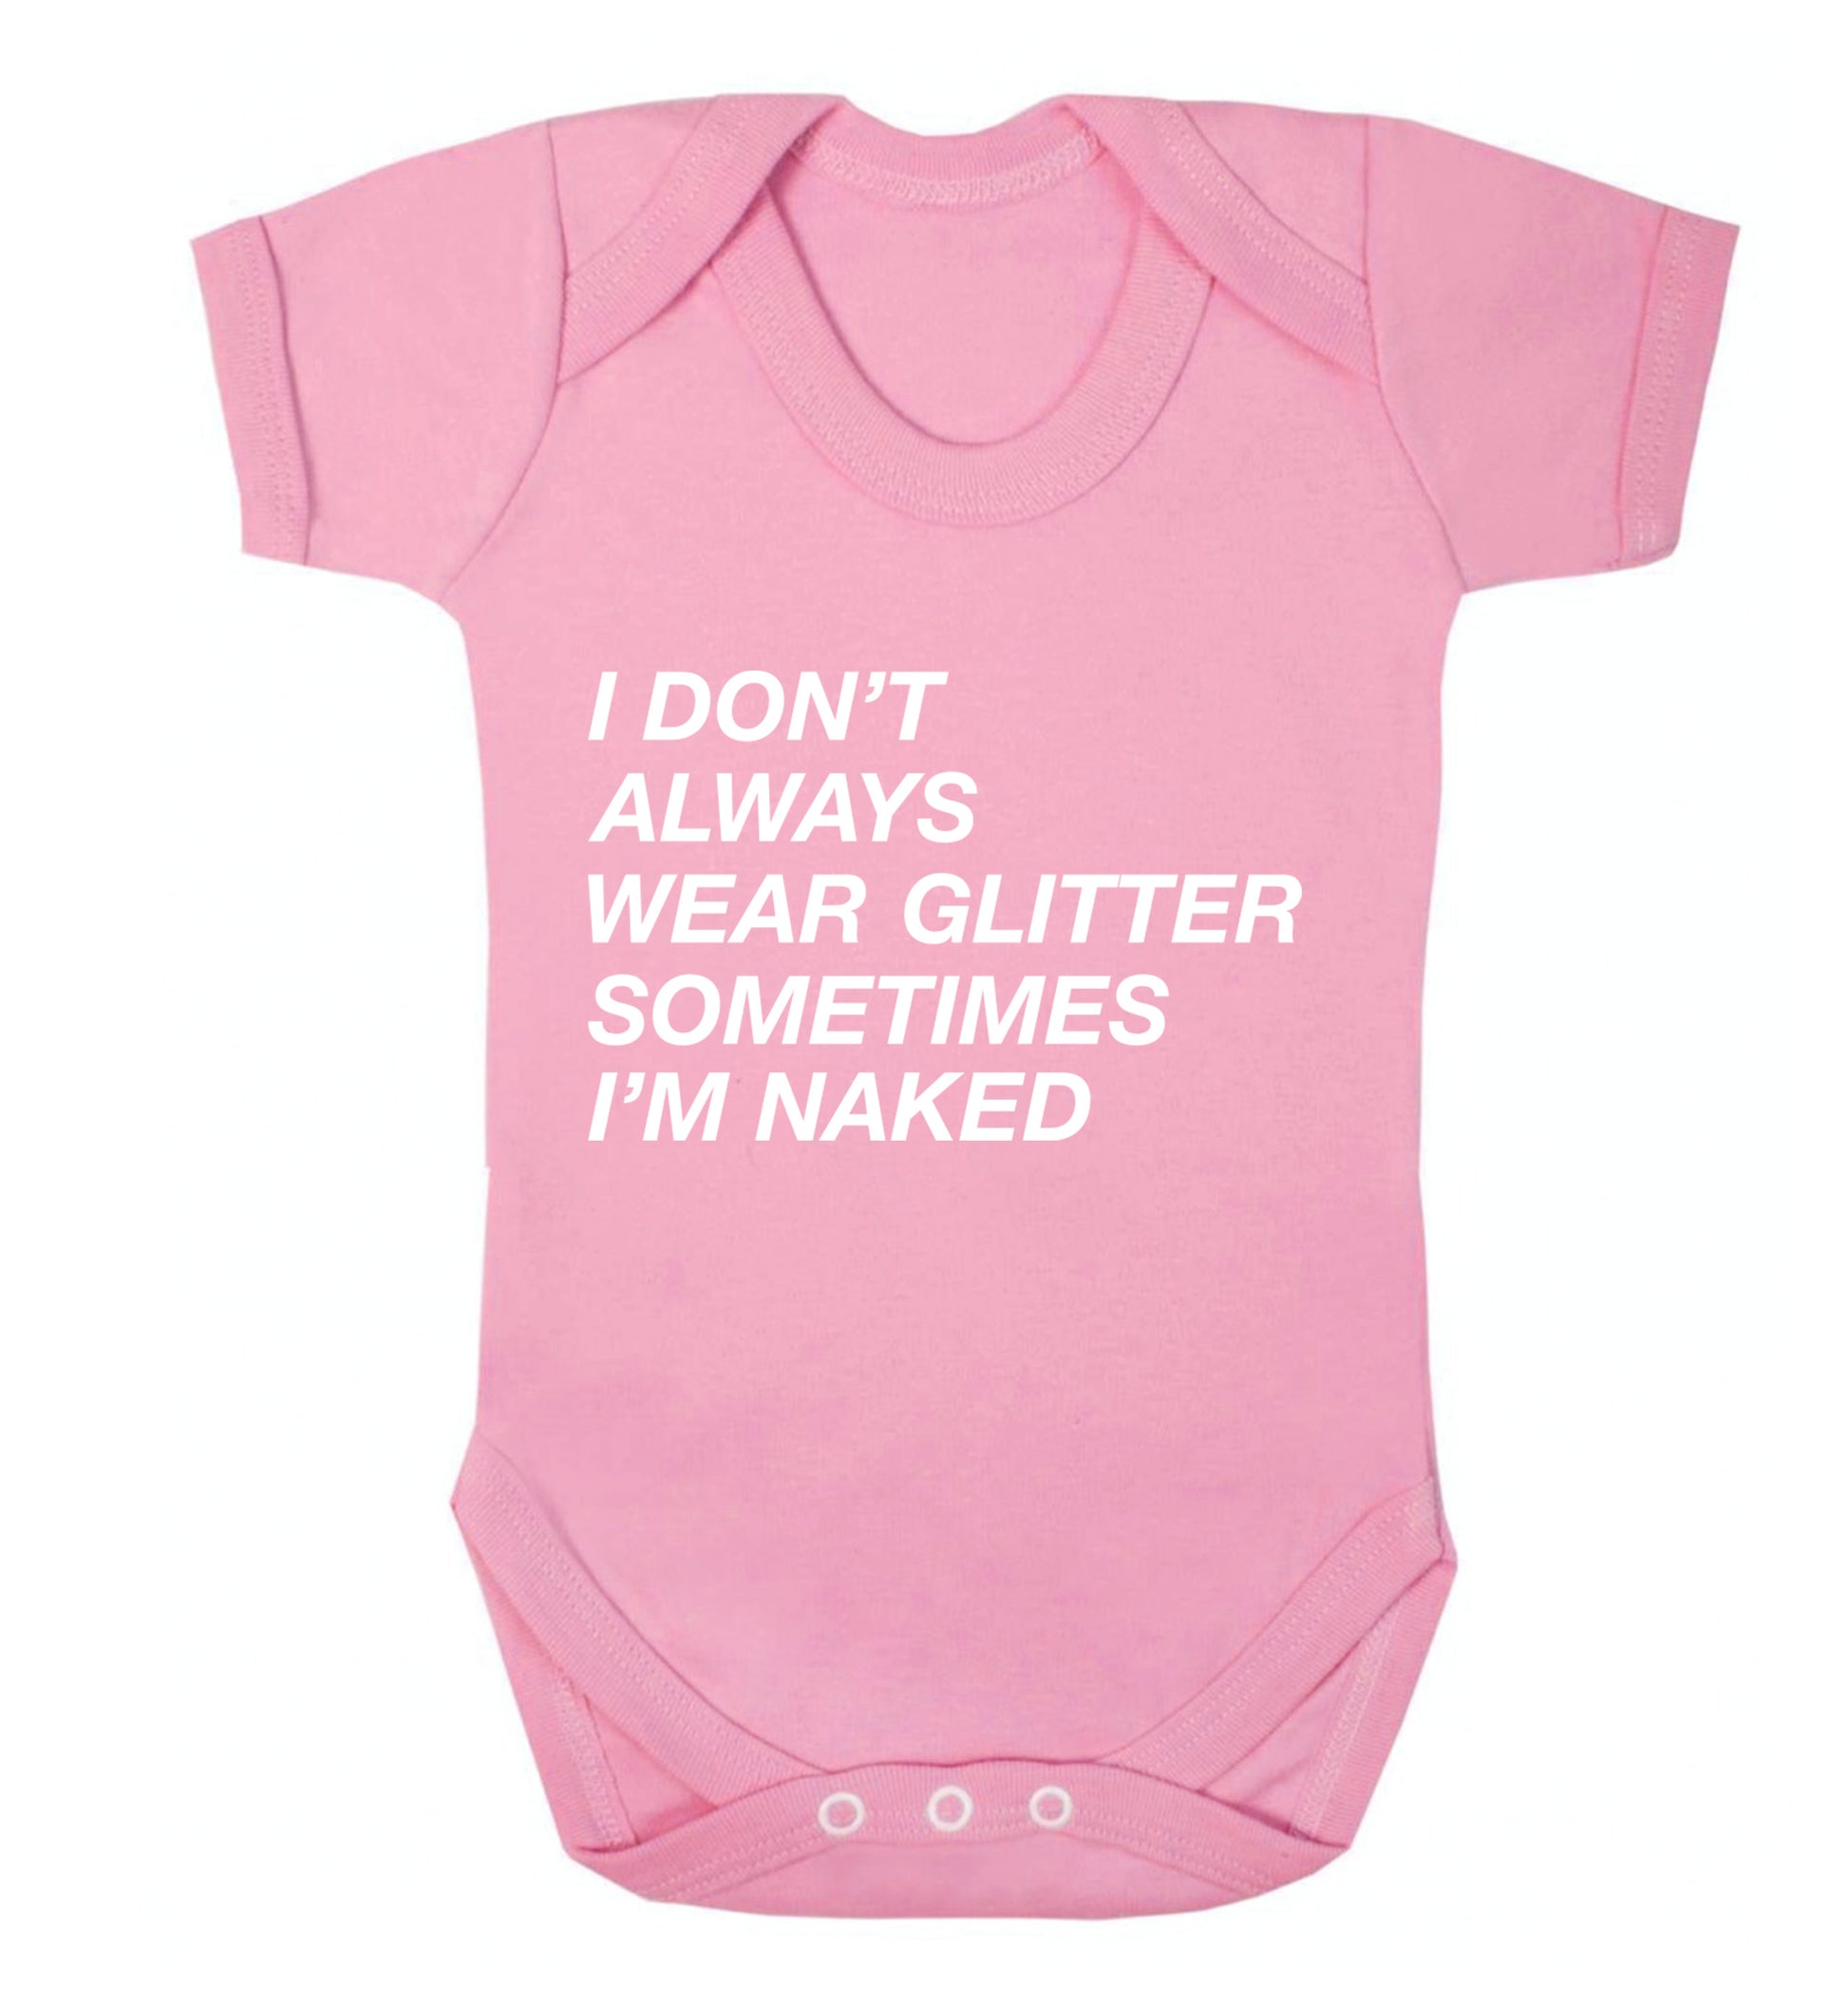 I don't always wear glitter sometimes I'm naked! Baby Vest pale pink 18-24 months